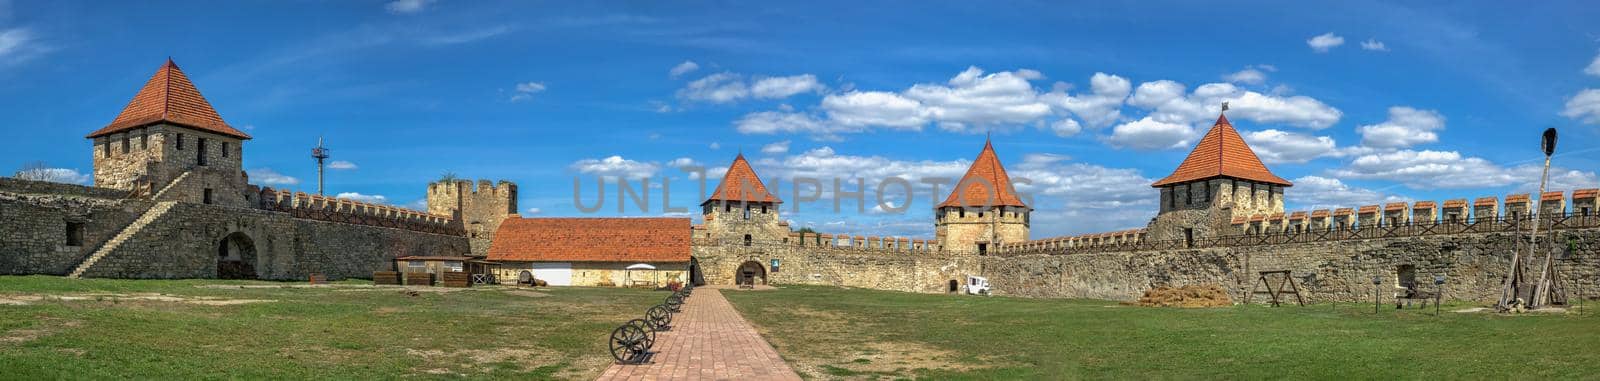 Inside of Bender fortress, Moldova by Multipedia